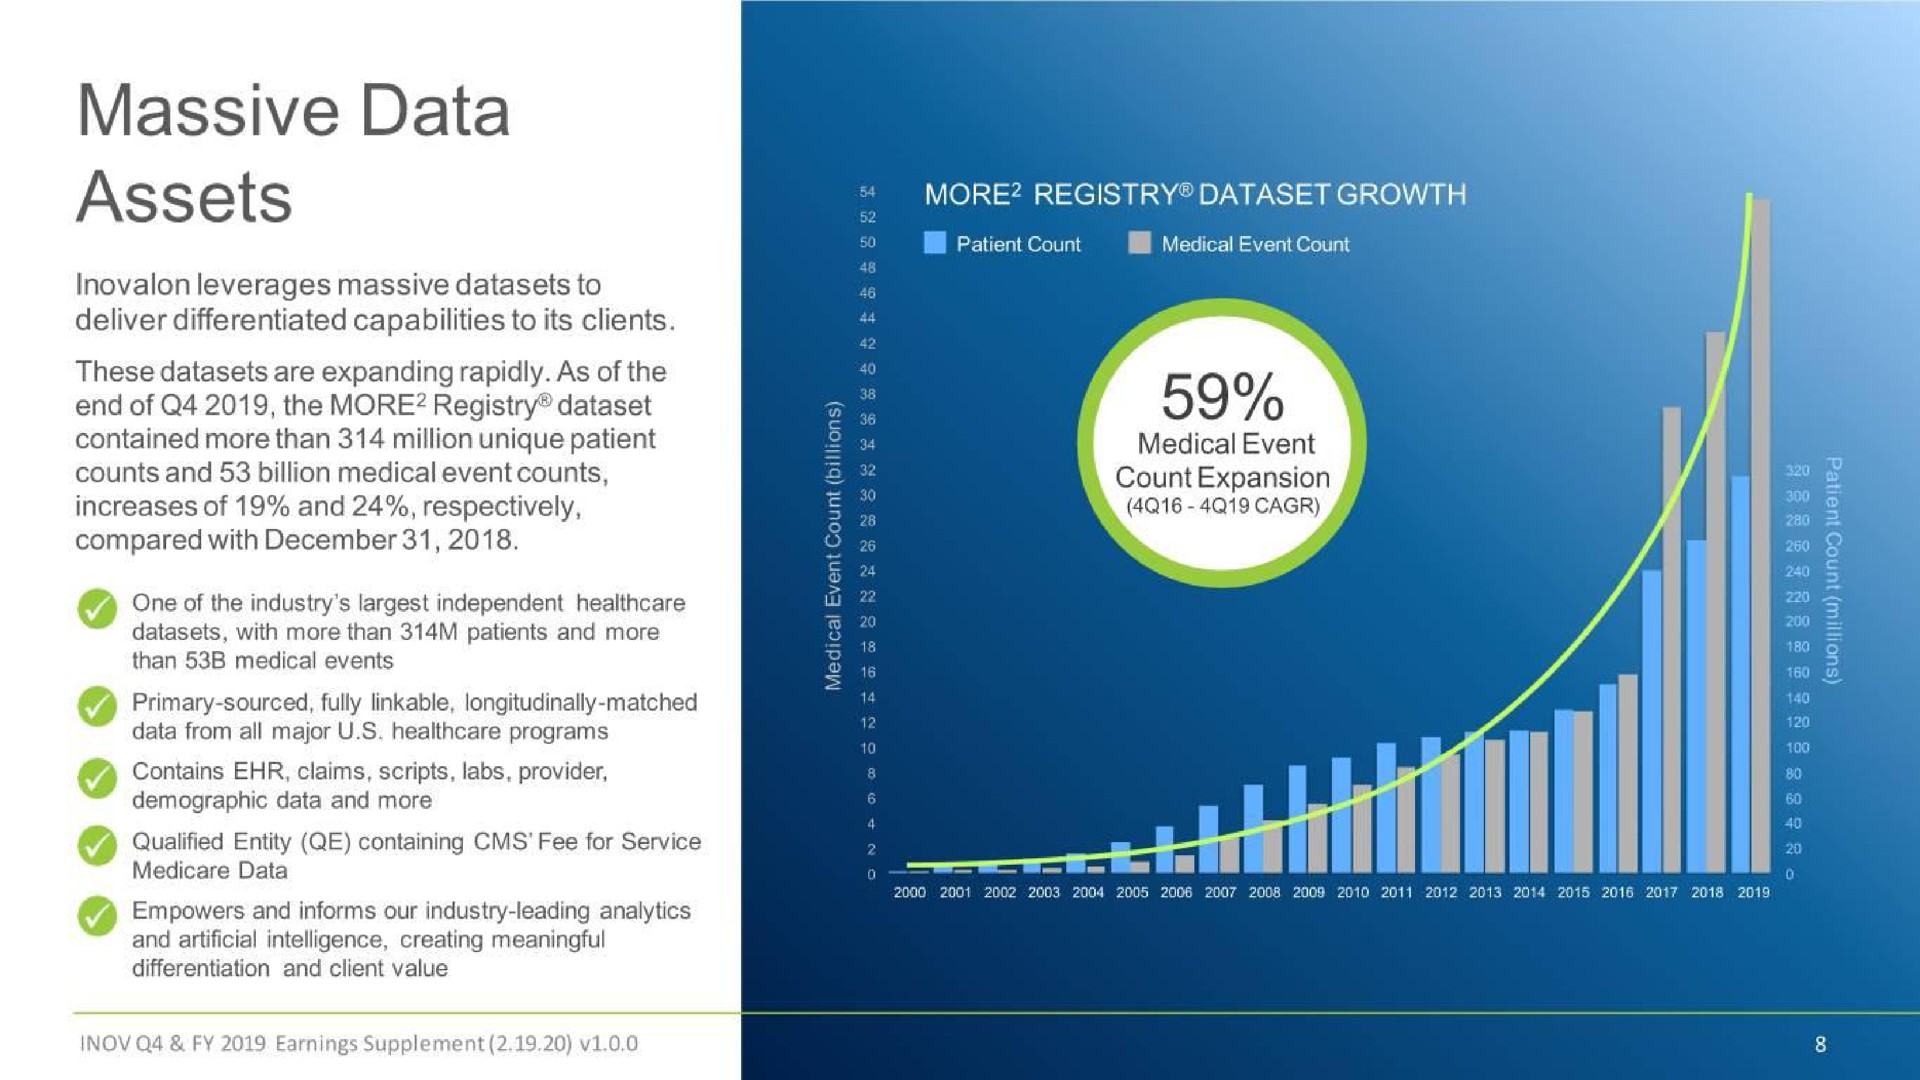 massive data as more registry growth | Inovalon